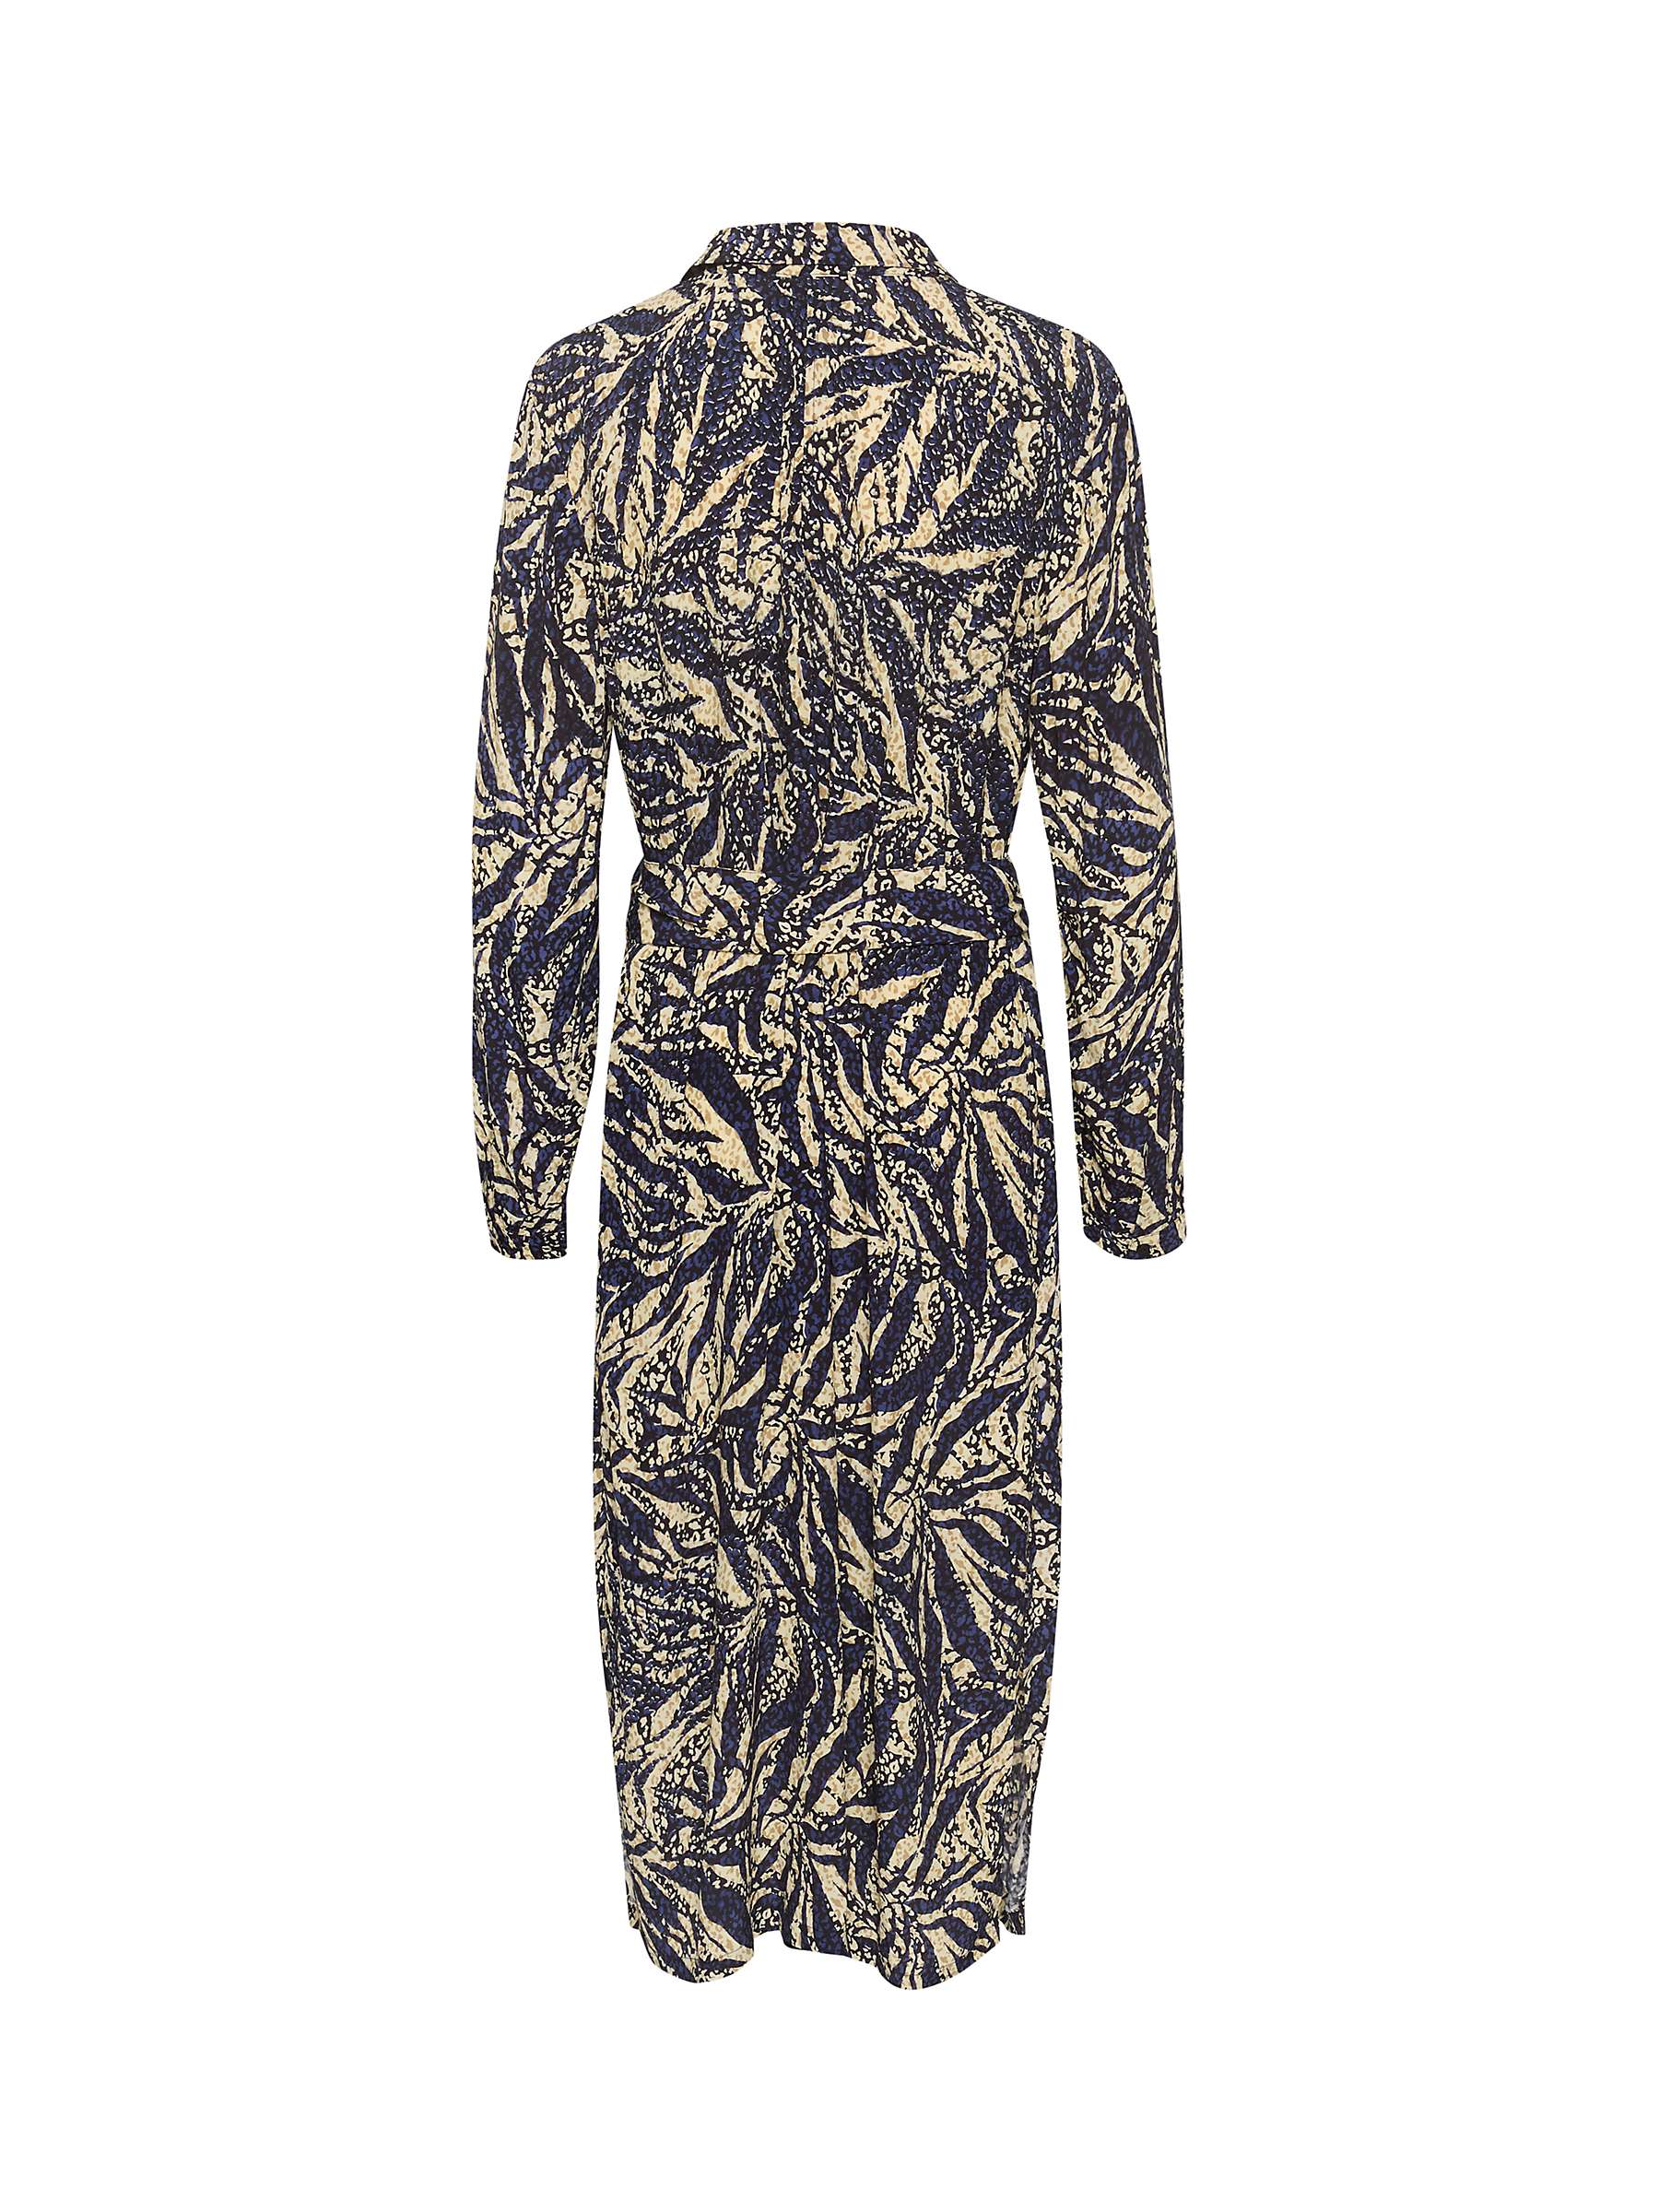 Buy Saint Tropez Blanca Long Sleeve Dress, Black Zebra Leaves Online at johnlewis.com